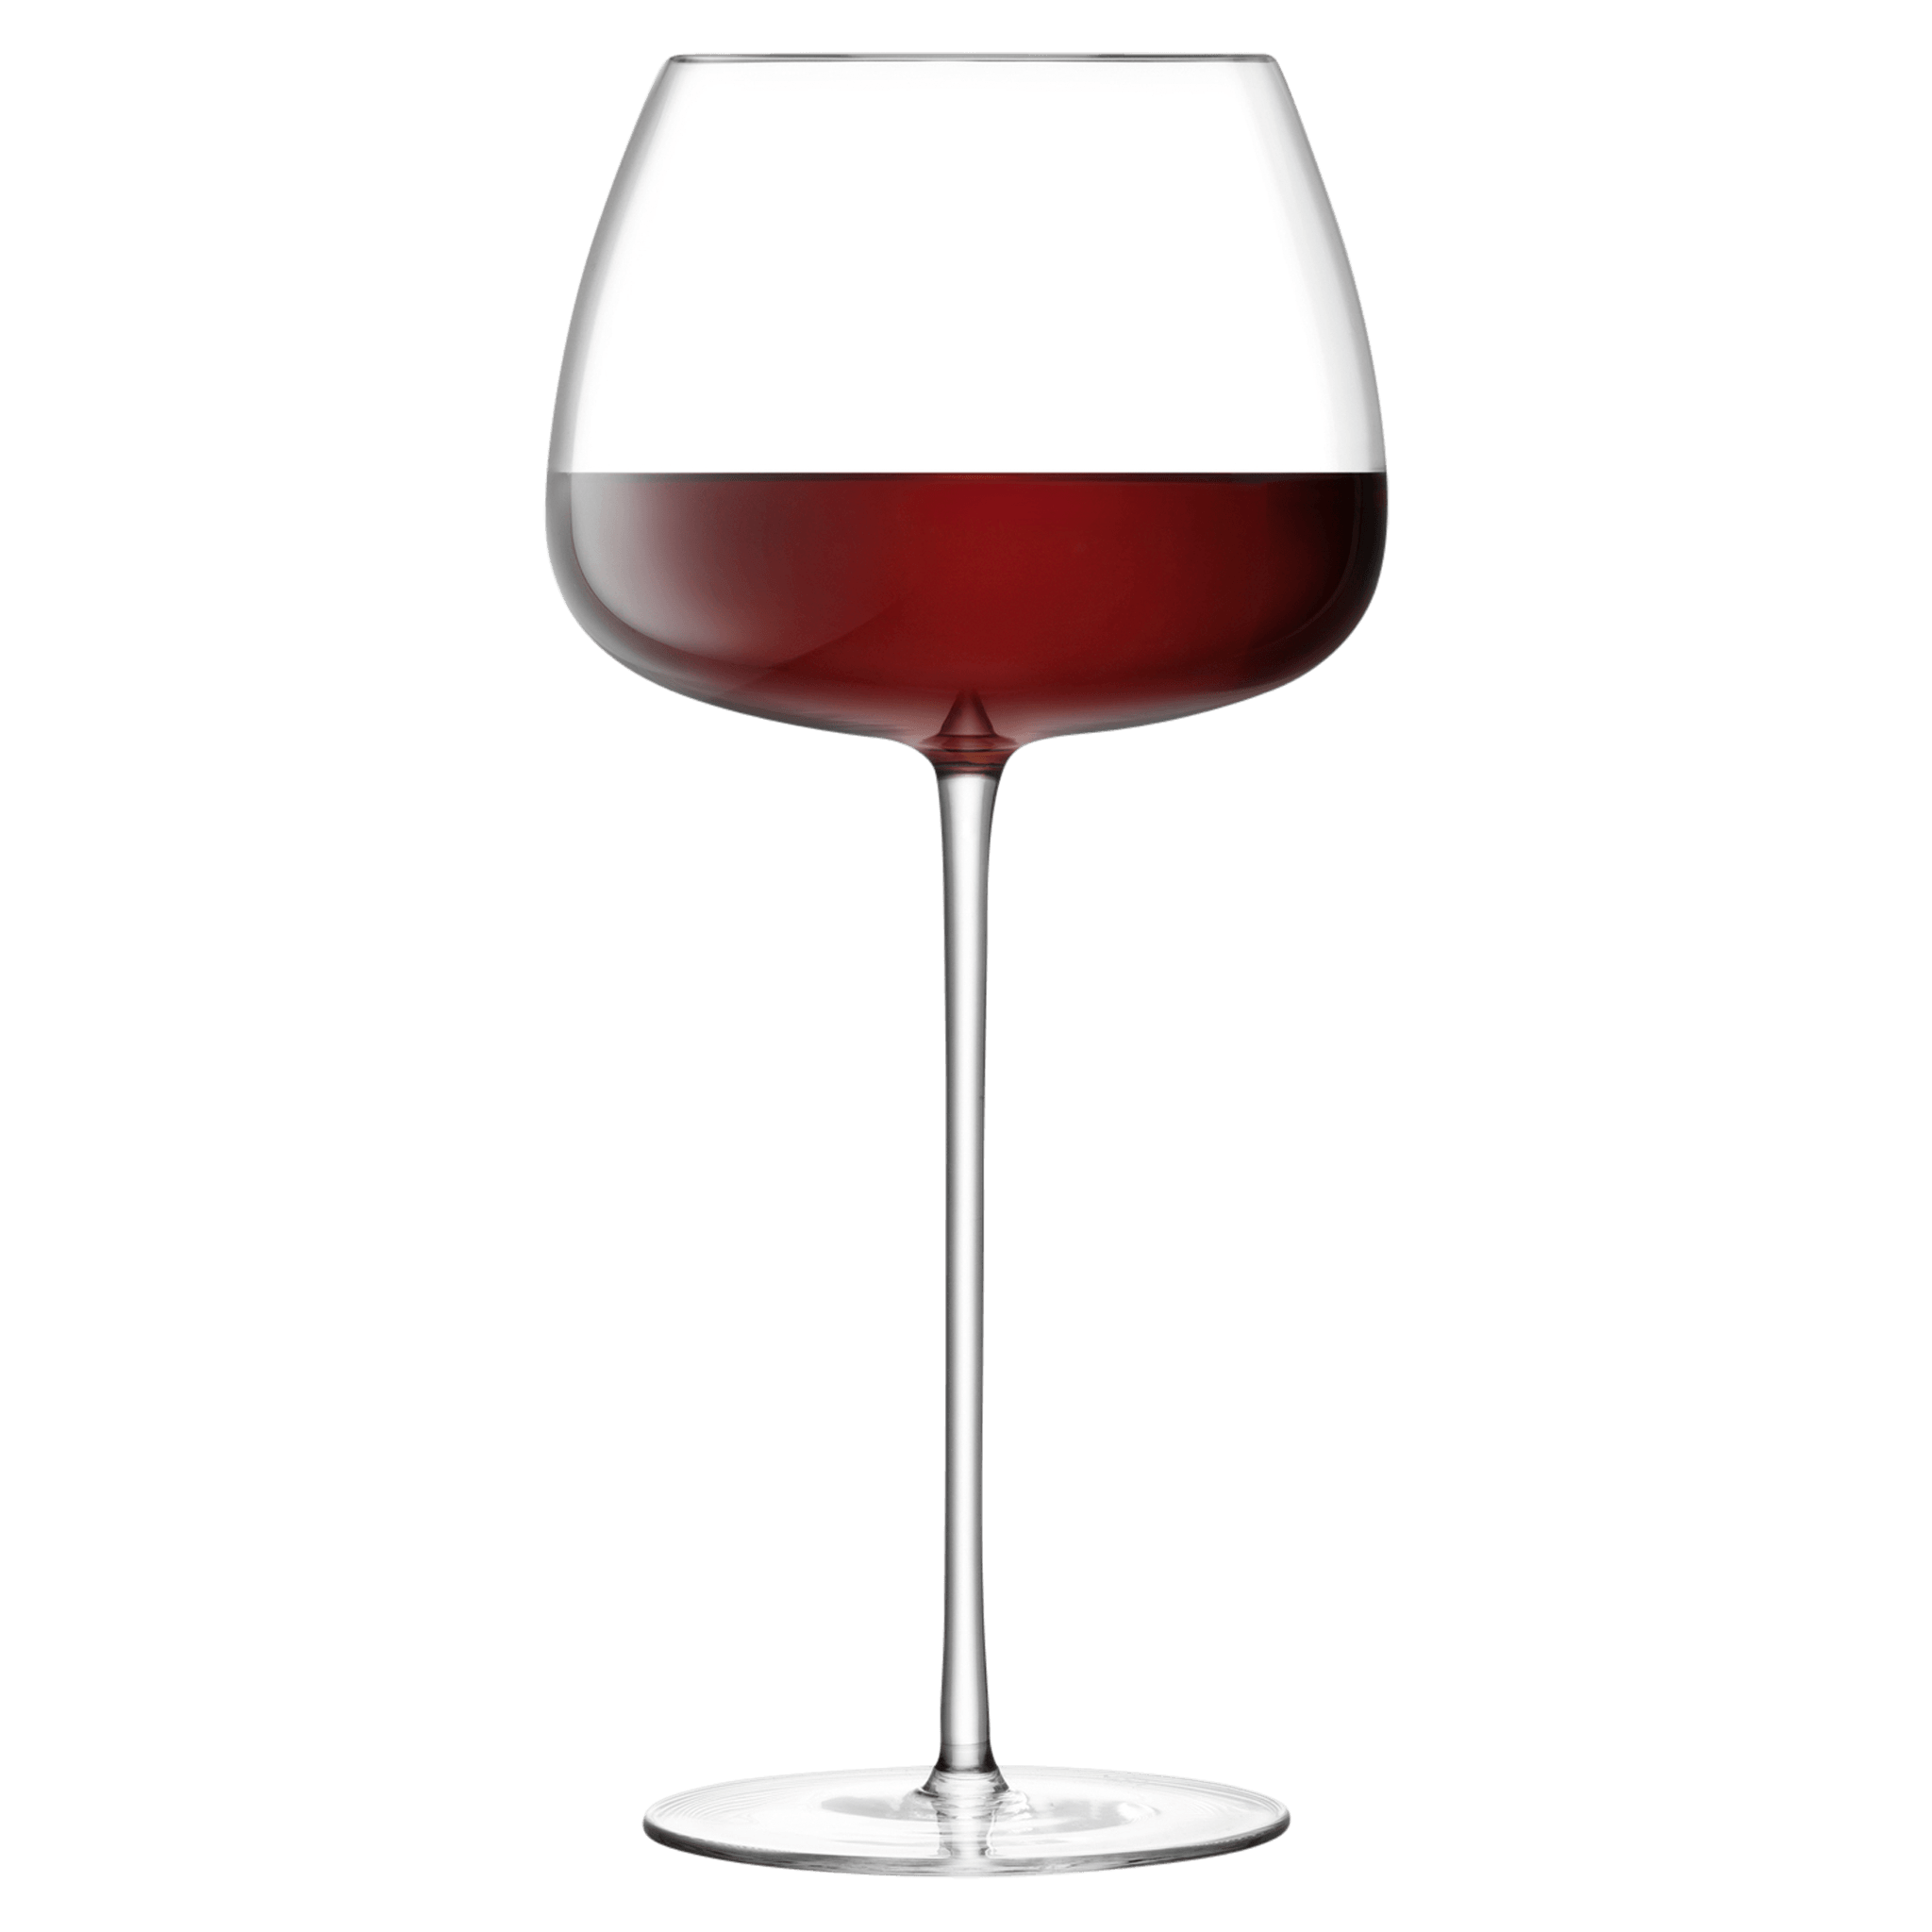 Cascata 13 oz Balloon Red Wine Glass - 6 count box